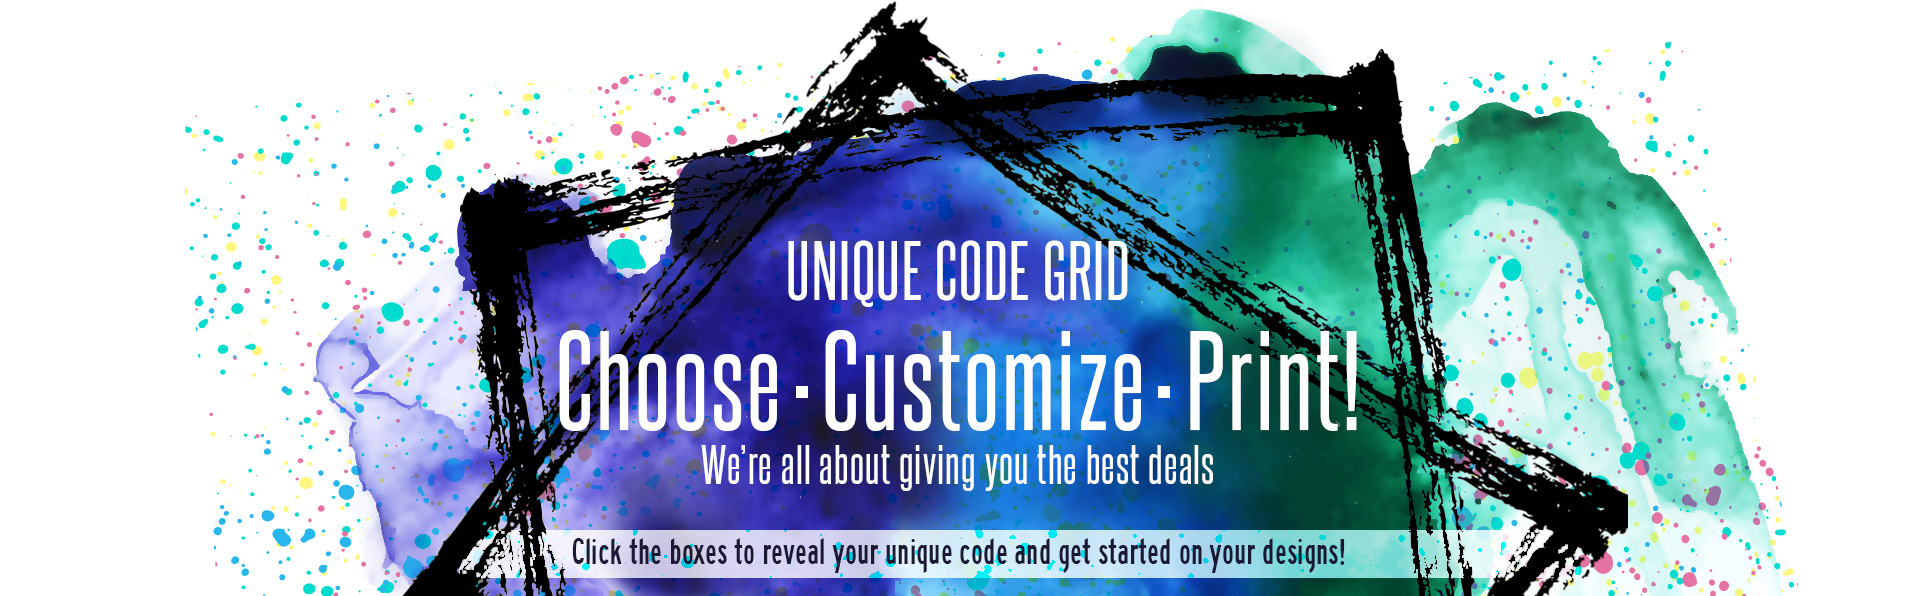 Unique Code Grid - Choose. Customize. Print!
